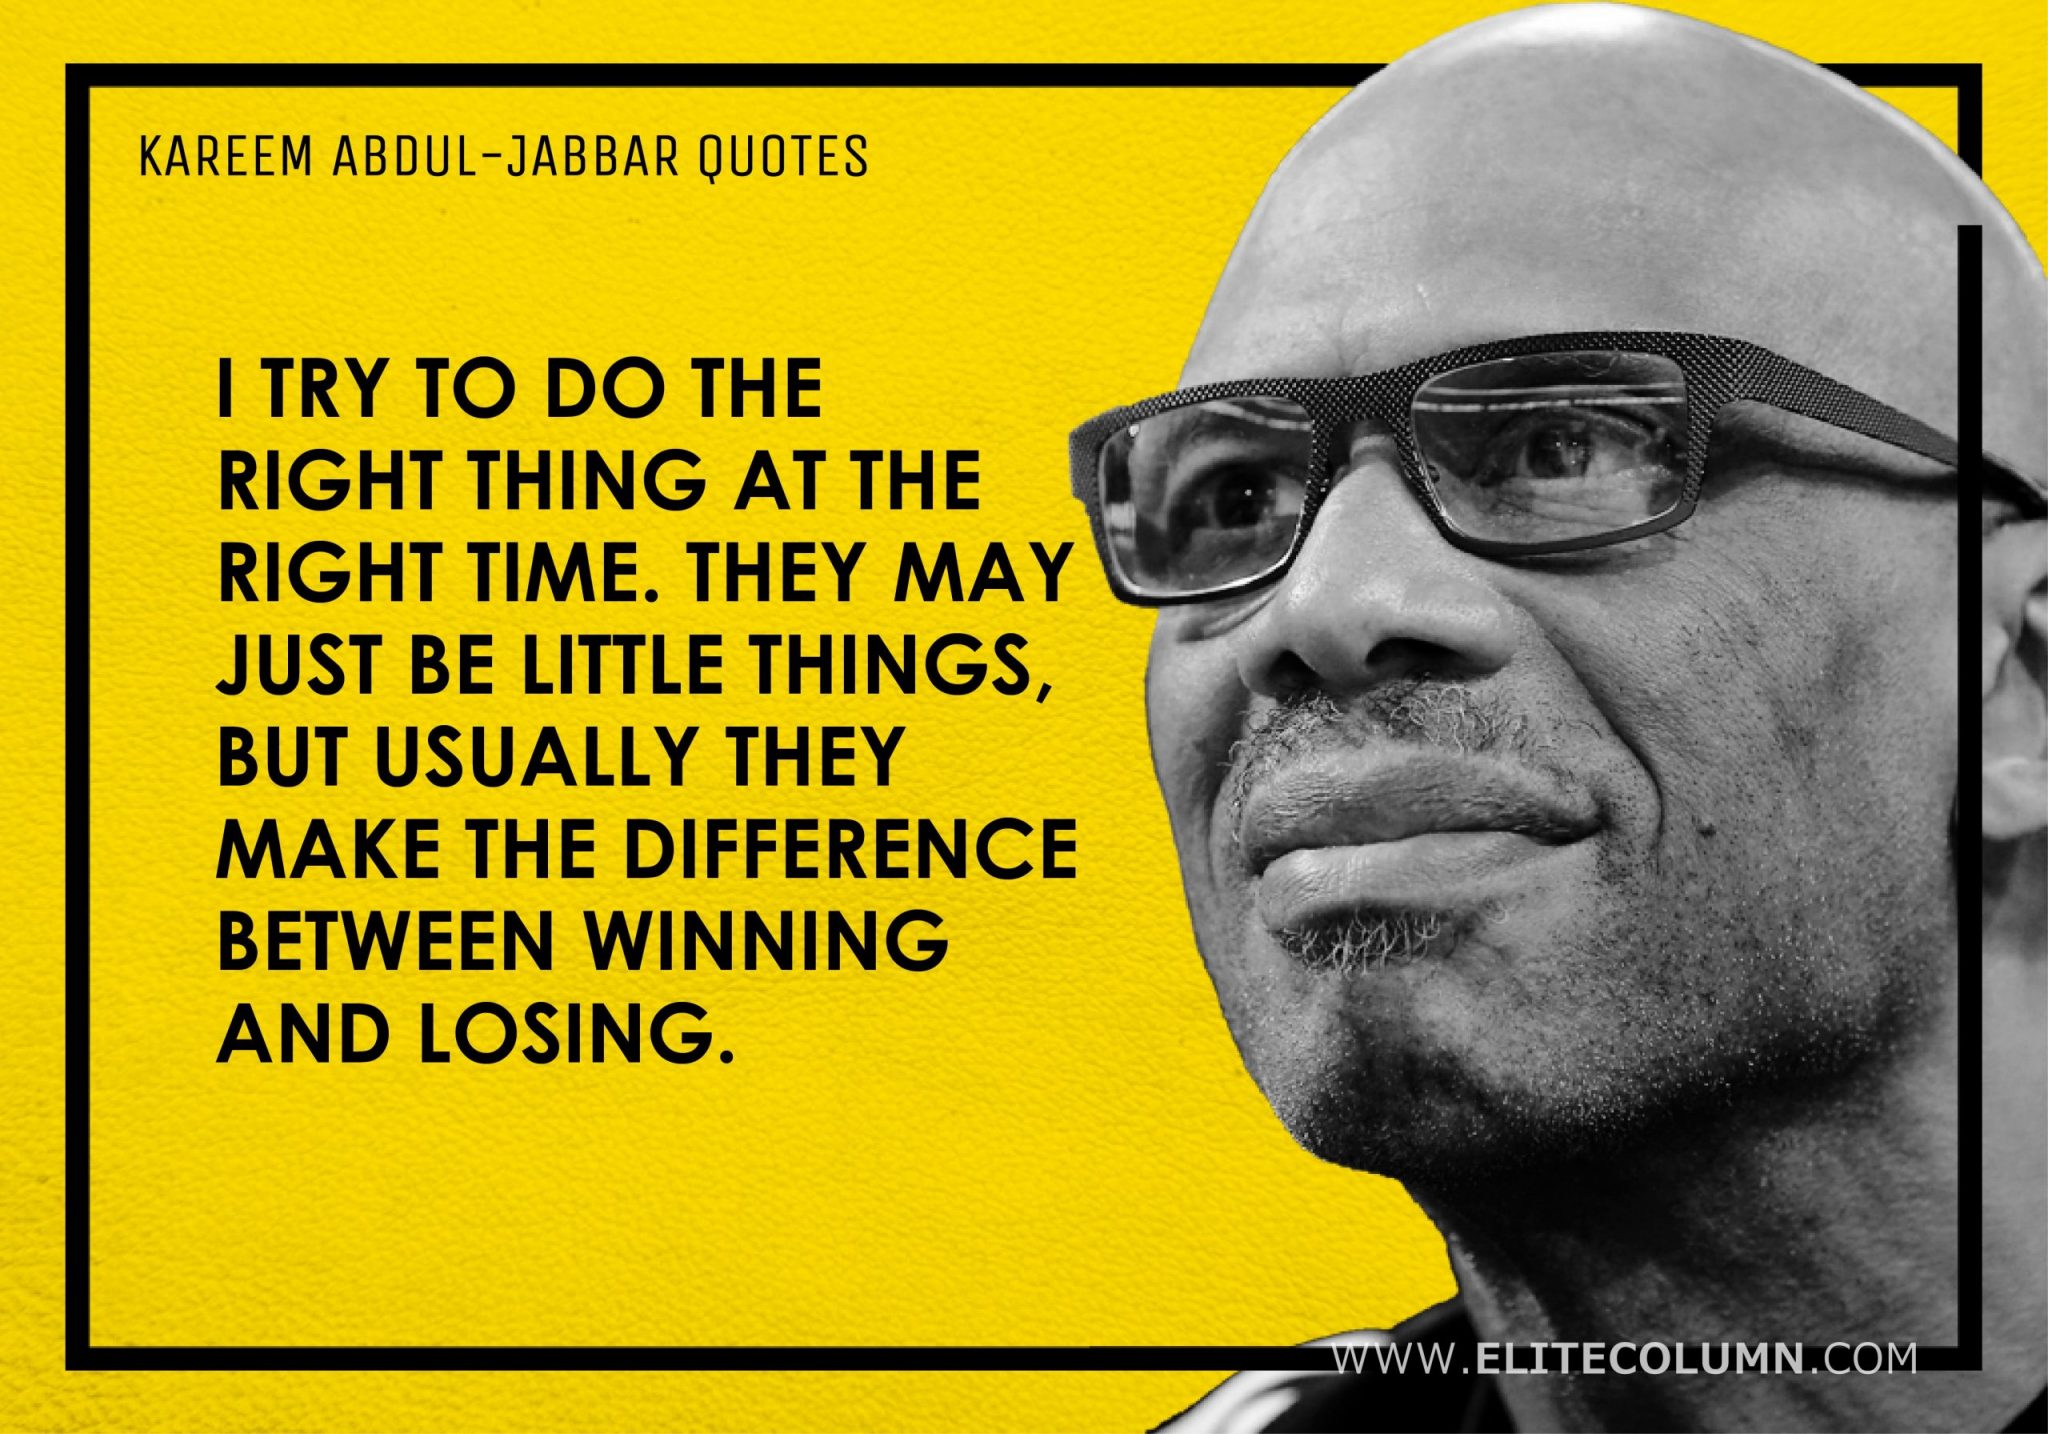 18 Kareem Abdul-Jabbar Quotes That Will Motivate You | EliteColumn